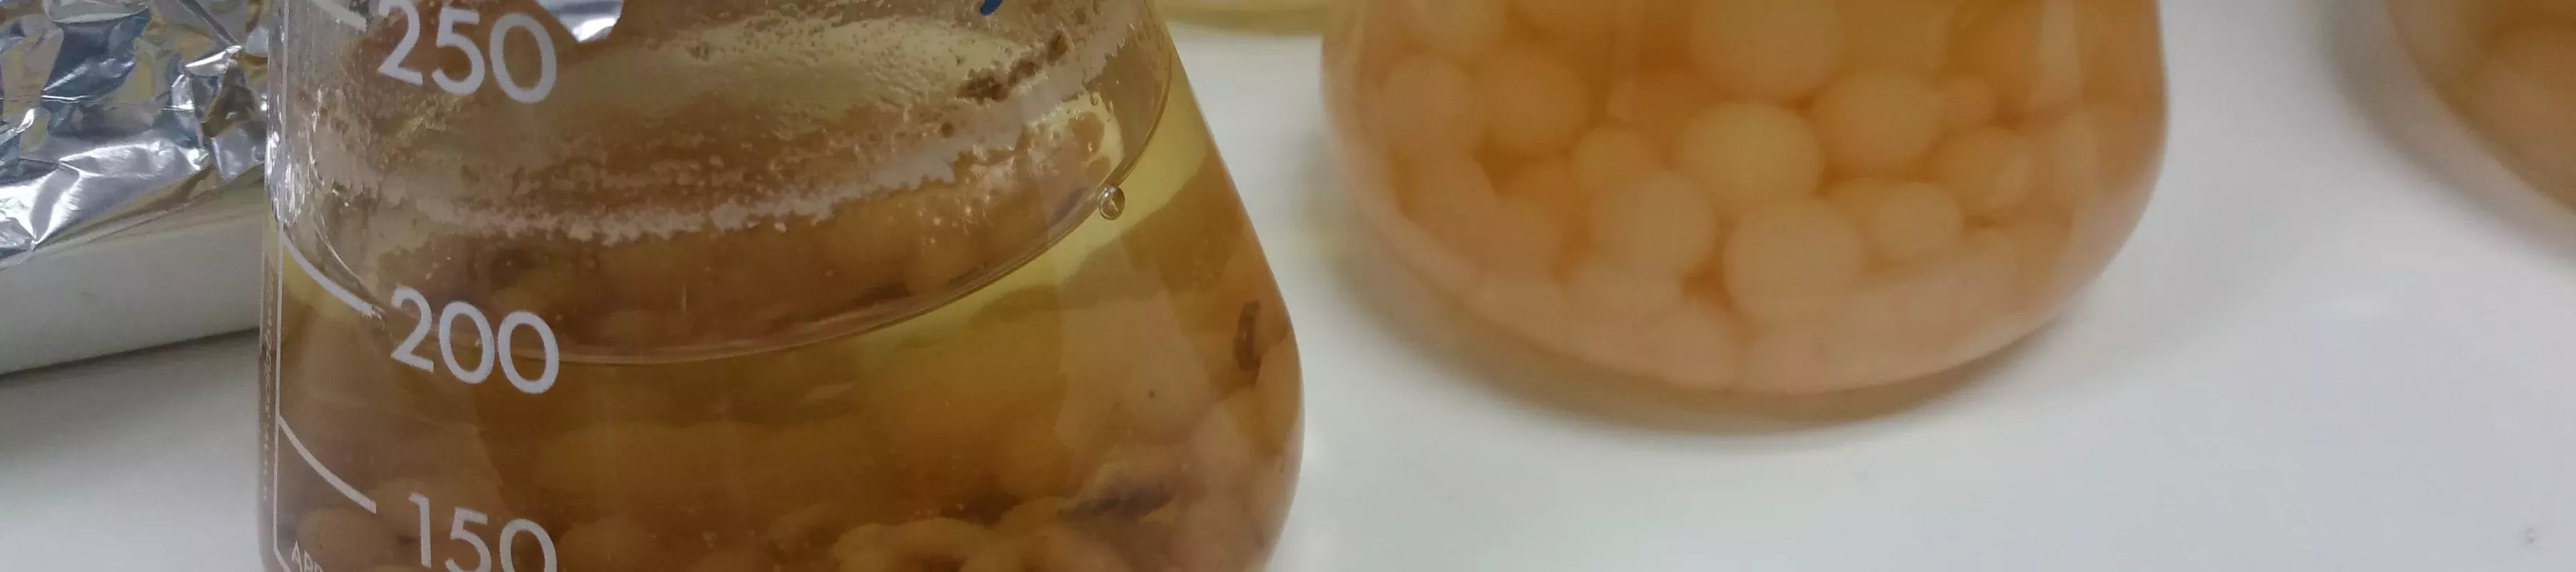 Endophytic fungi being grown in a liquid medium